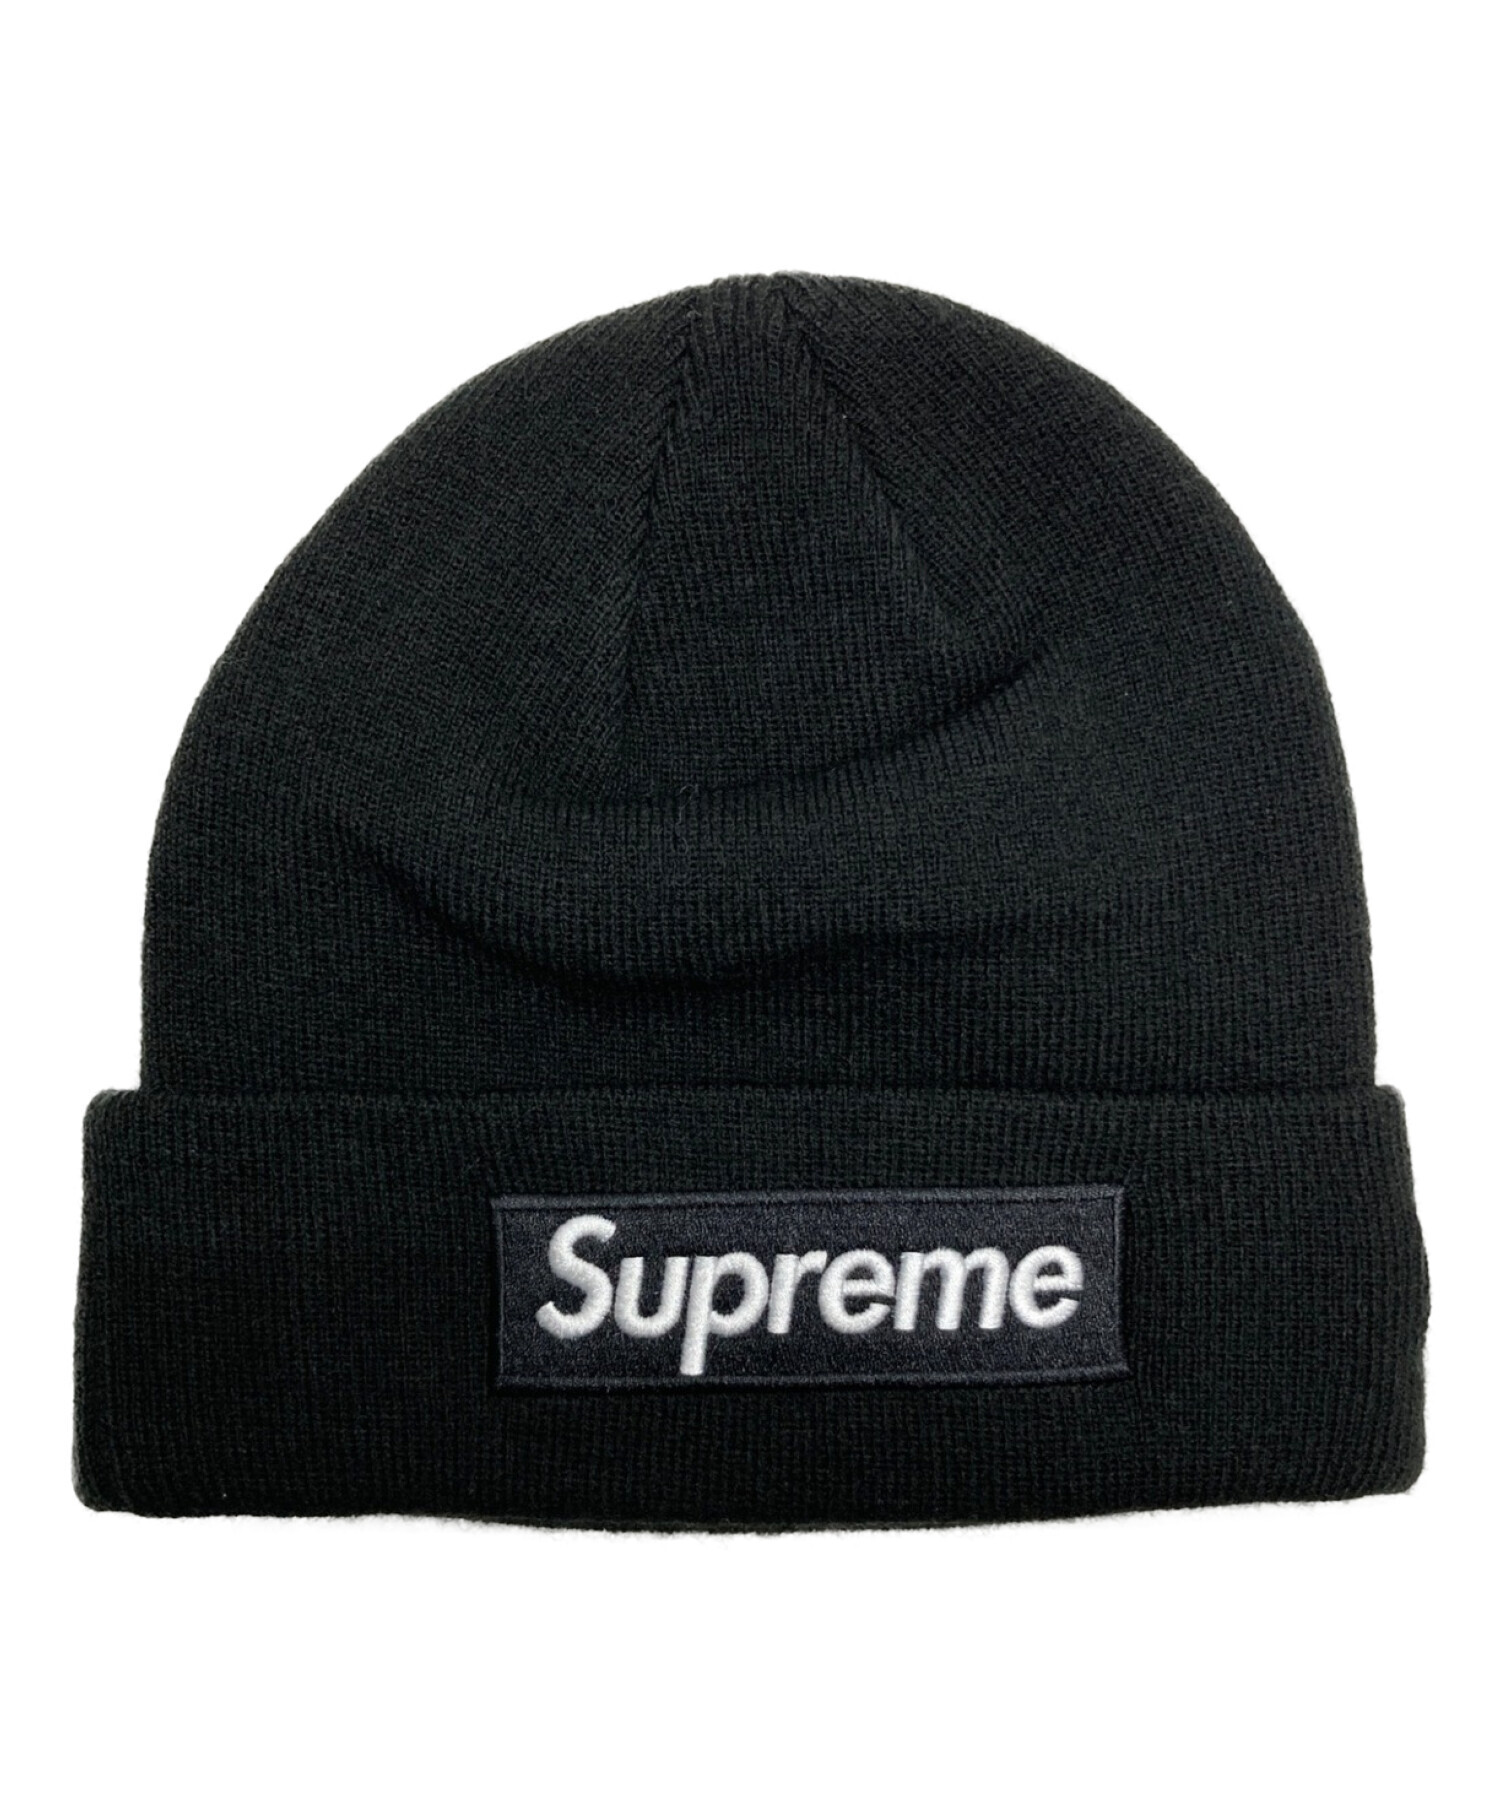 New Era (ニューエラ) Supreme (シュプリーム) ボックスロゴニット帽 G2908242021 ブラック